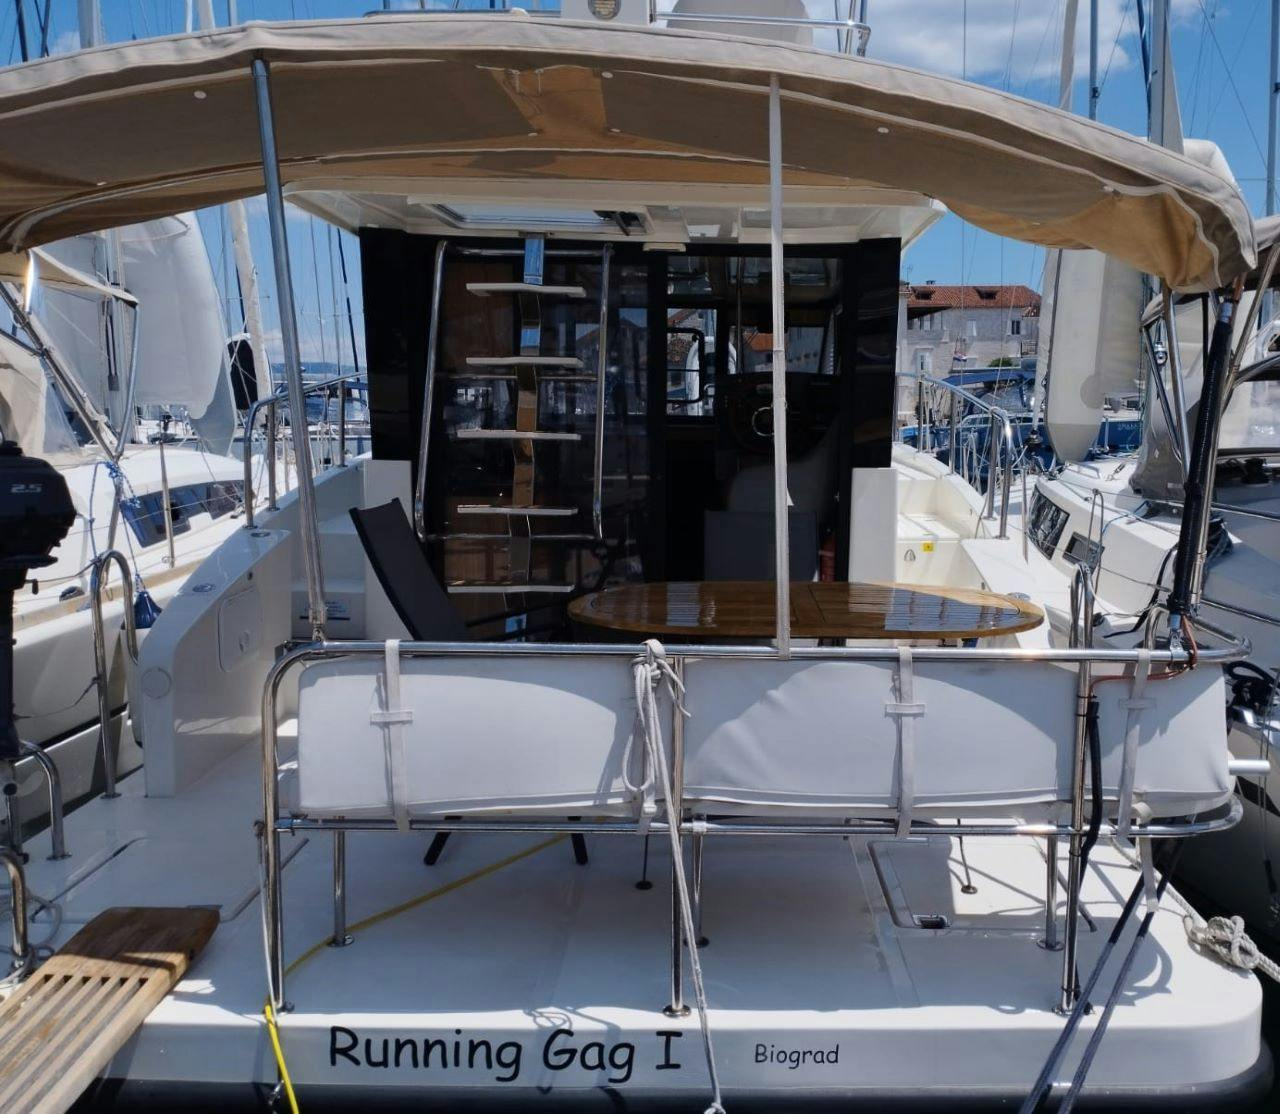 Book Futura 40 Grand Horizon Motor yacht for bareboat charter in ACI Marina Trogir, Split region, Croatia with TripYacht!, picture 1